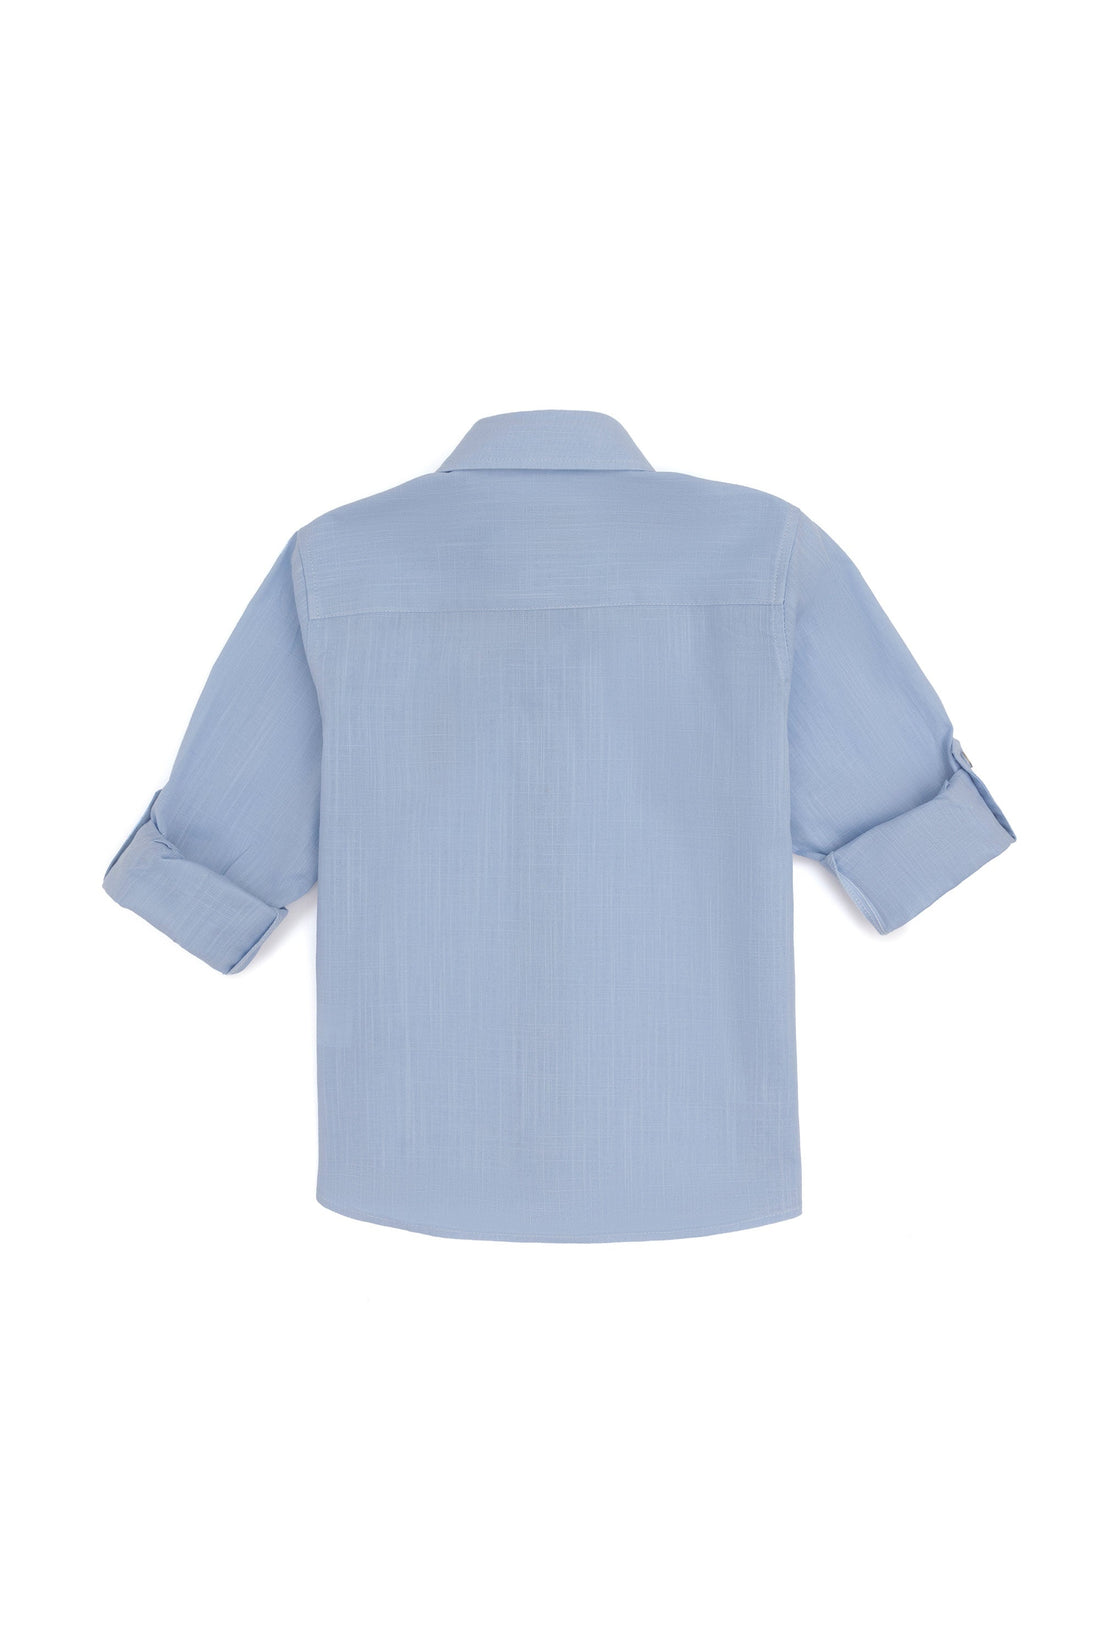 Boys Blue Shirt Long Sleeve_G083SZ0040 1840402_VR003_02